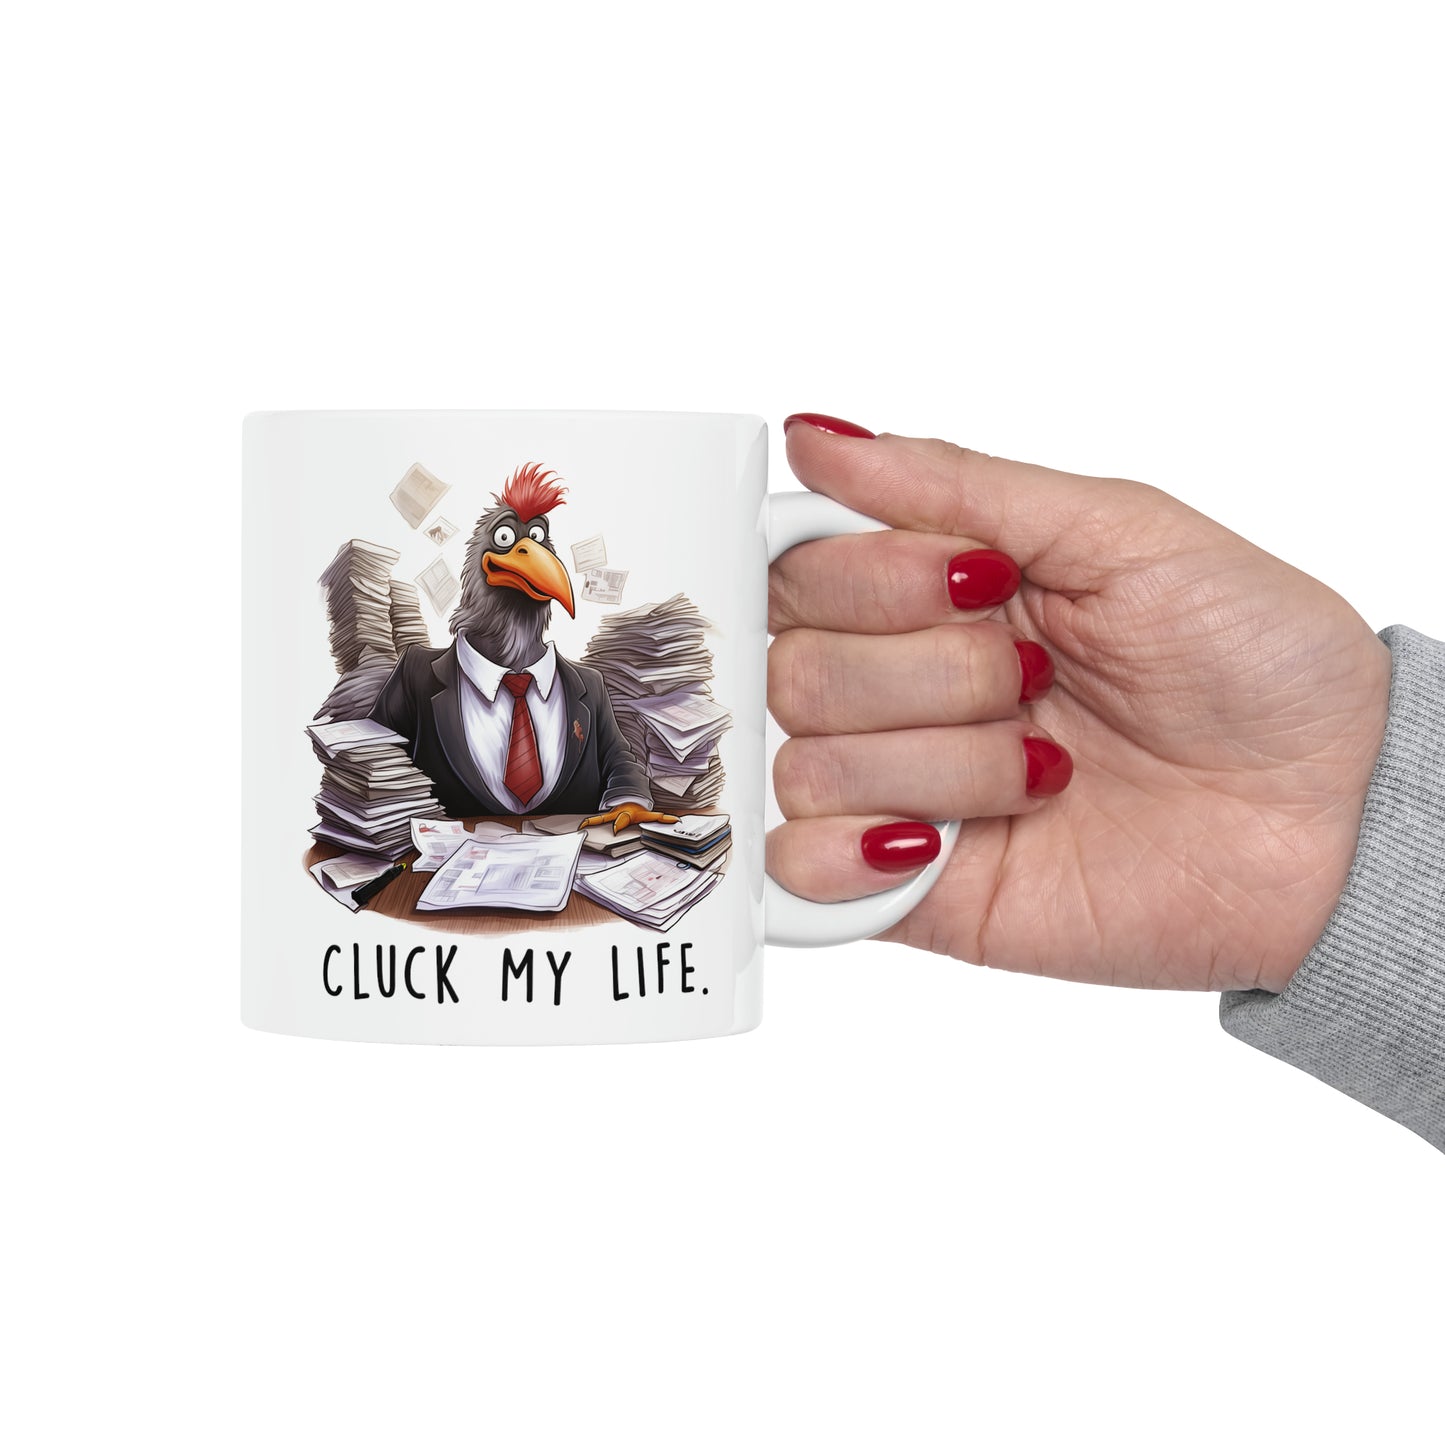 Cluck My Life, Funny Chicken Mug